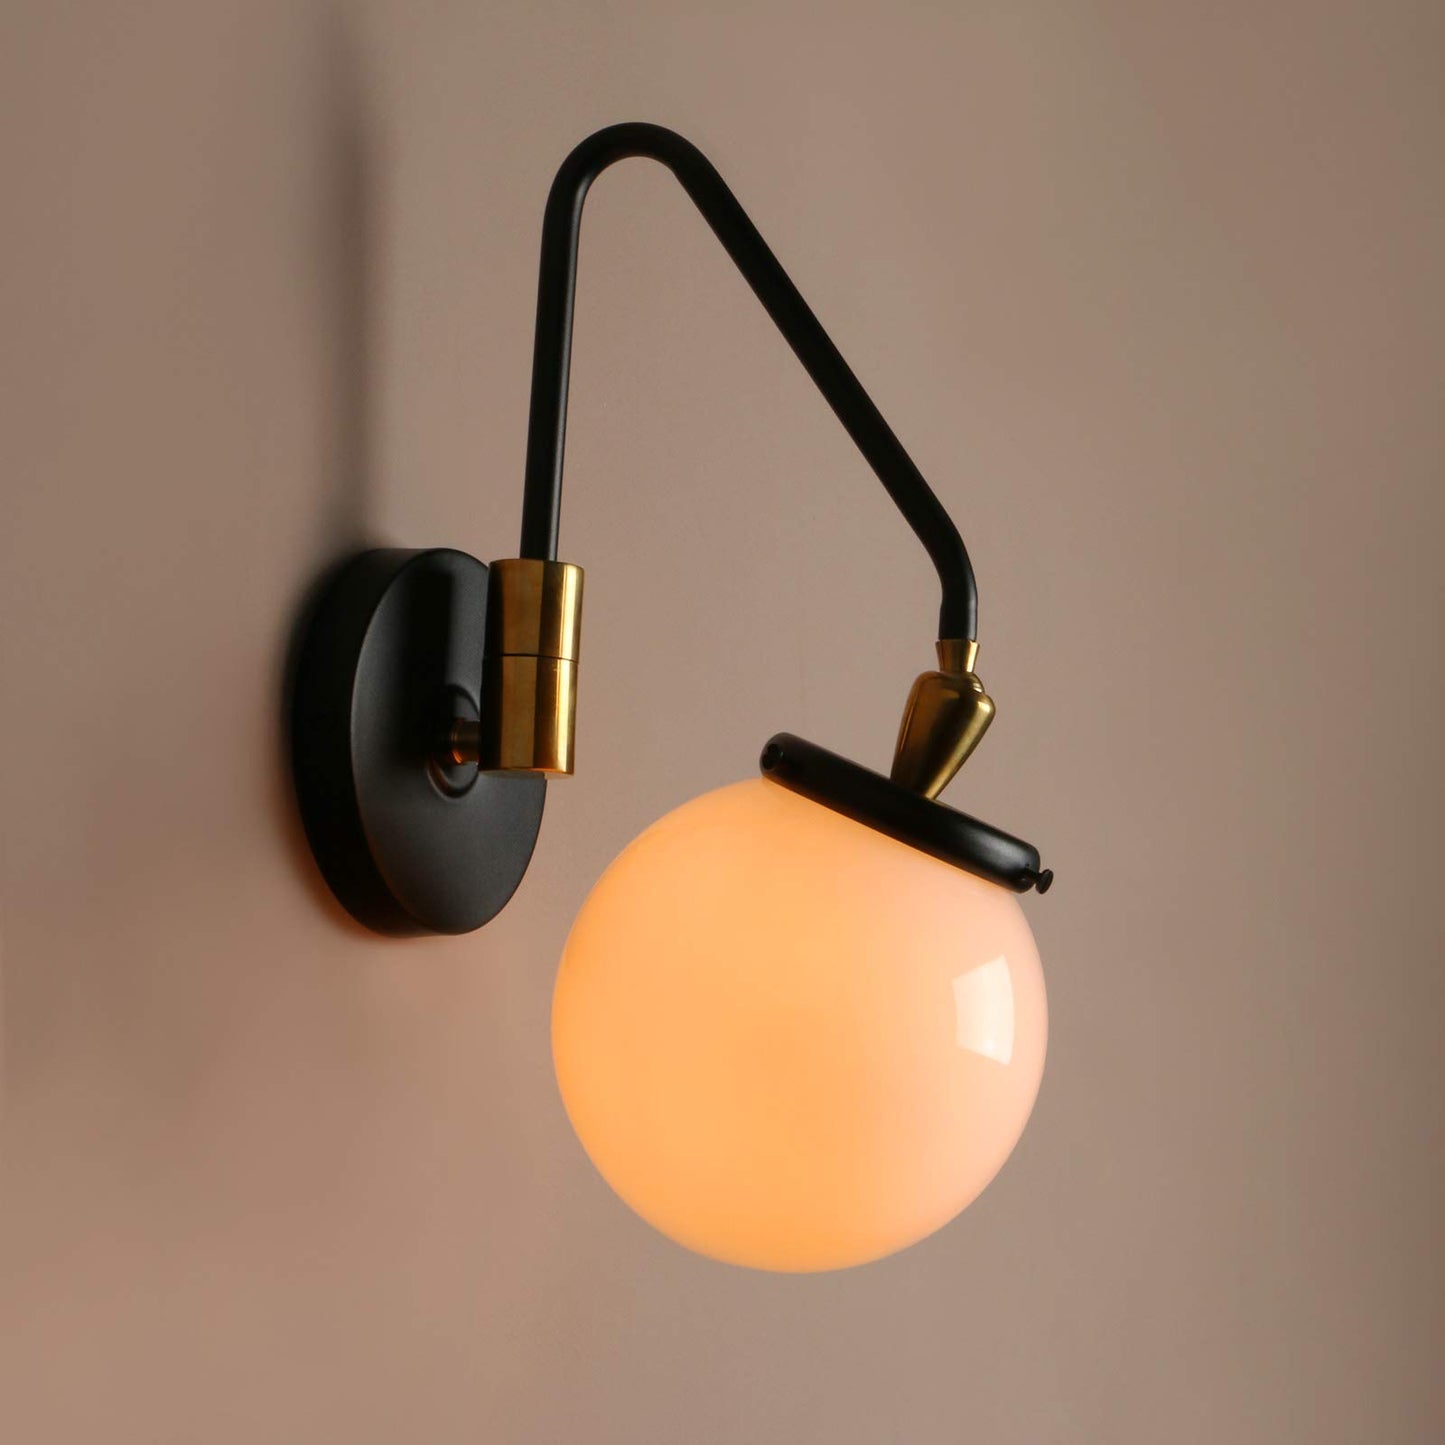 Vintage Industrial Wall Light, Adjustable Swing Arm Bedside Lamp Wall Sconce Lighting